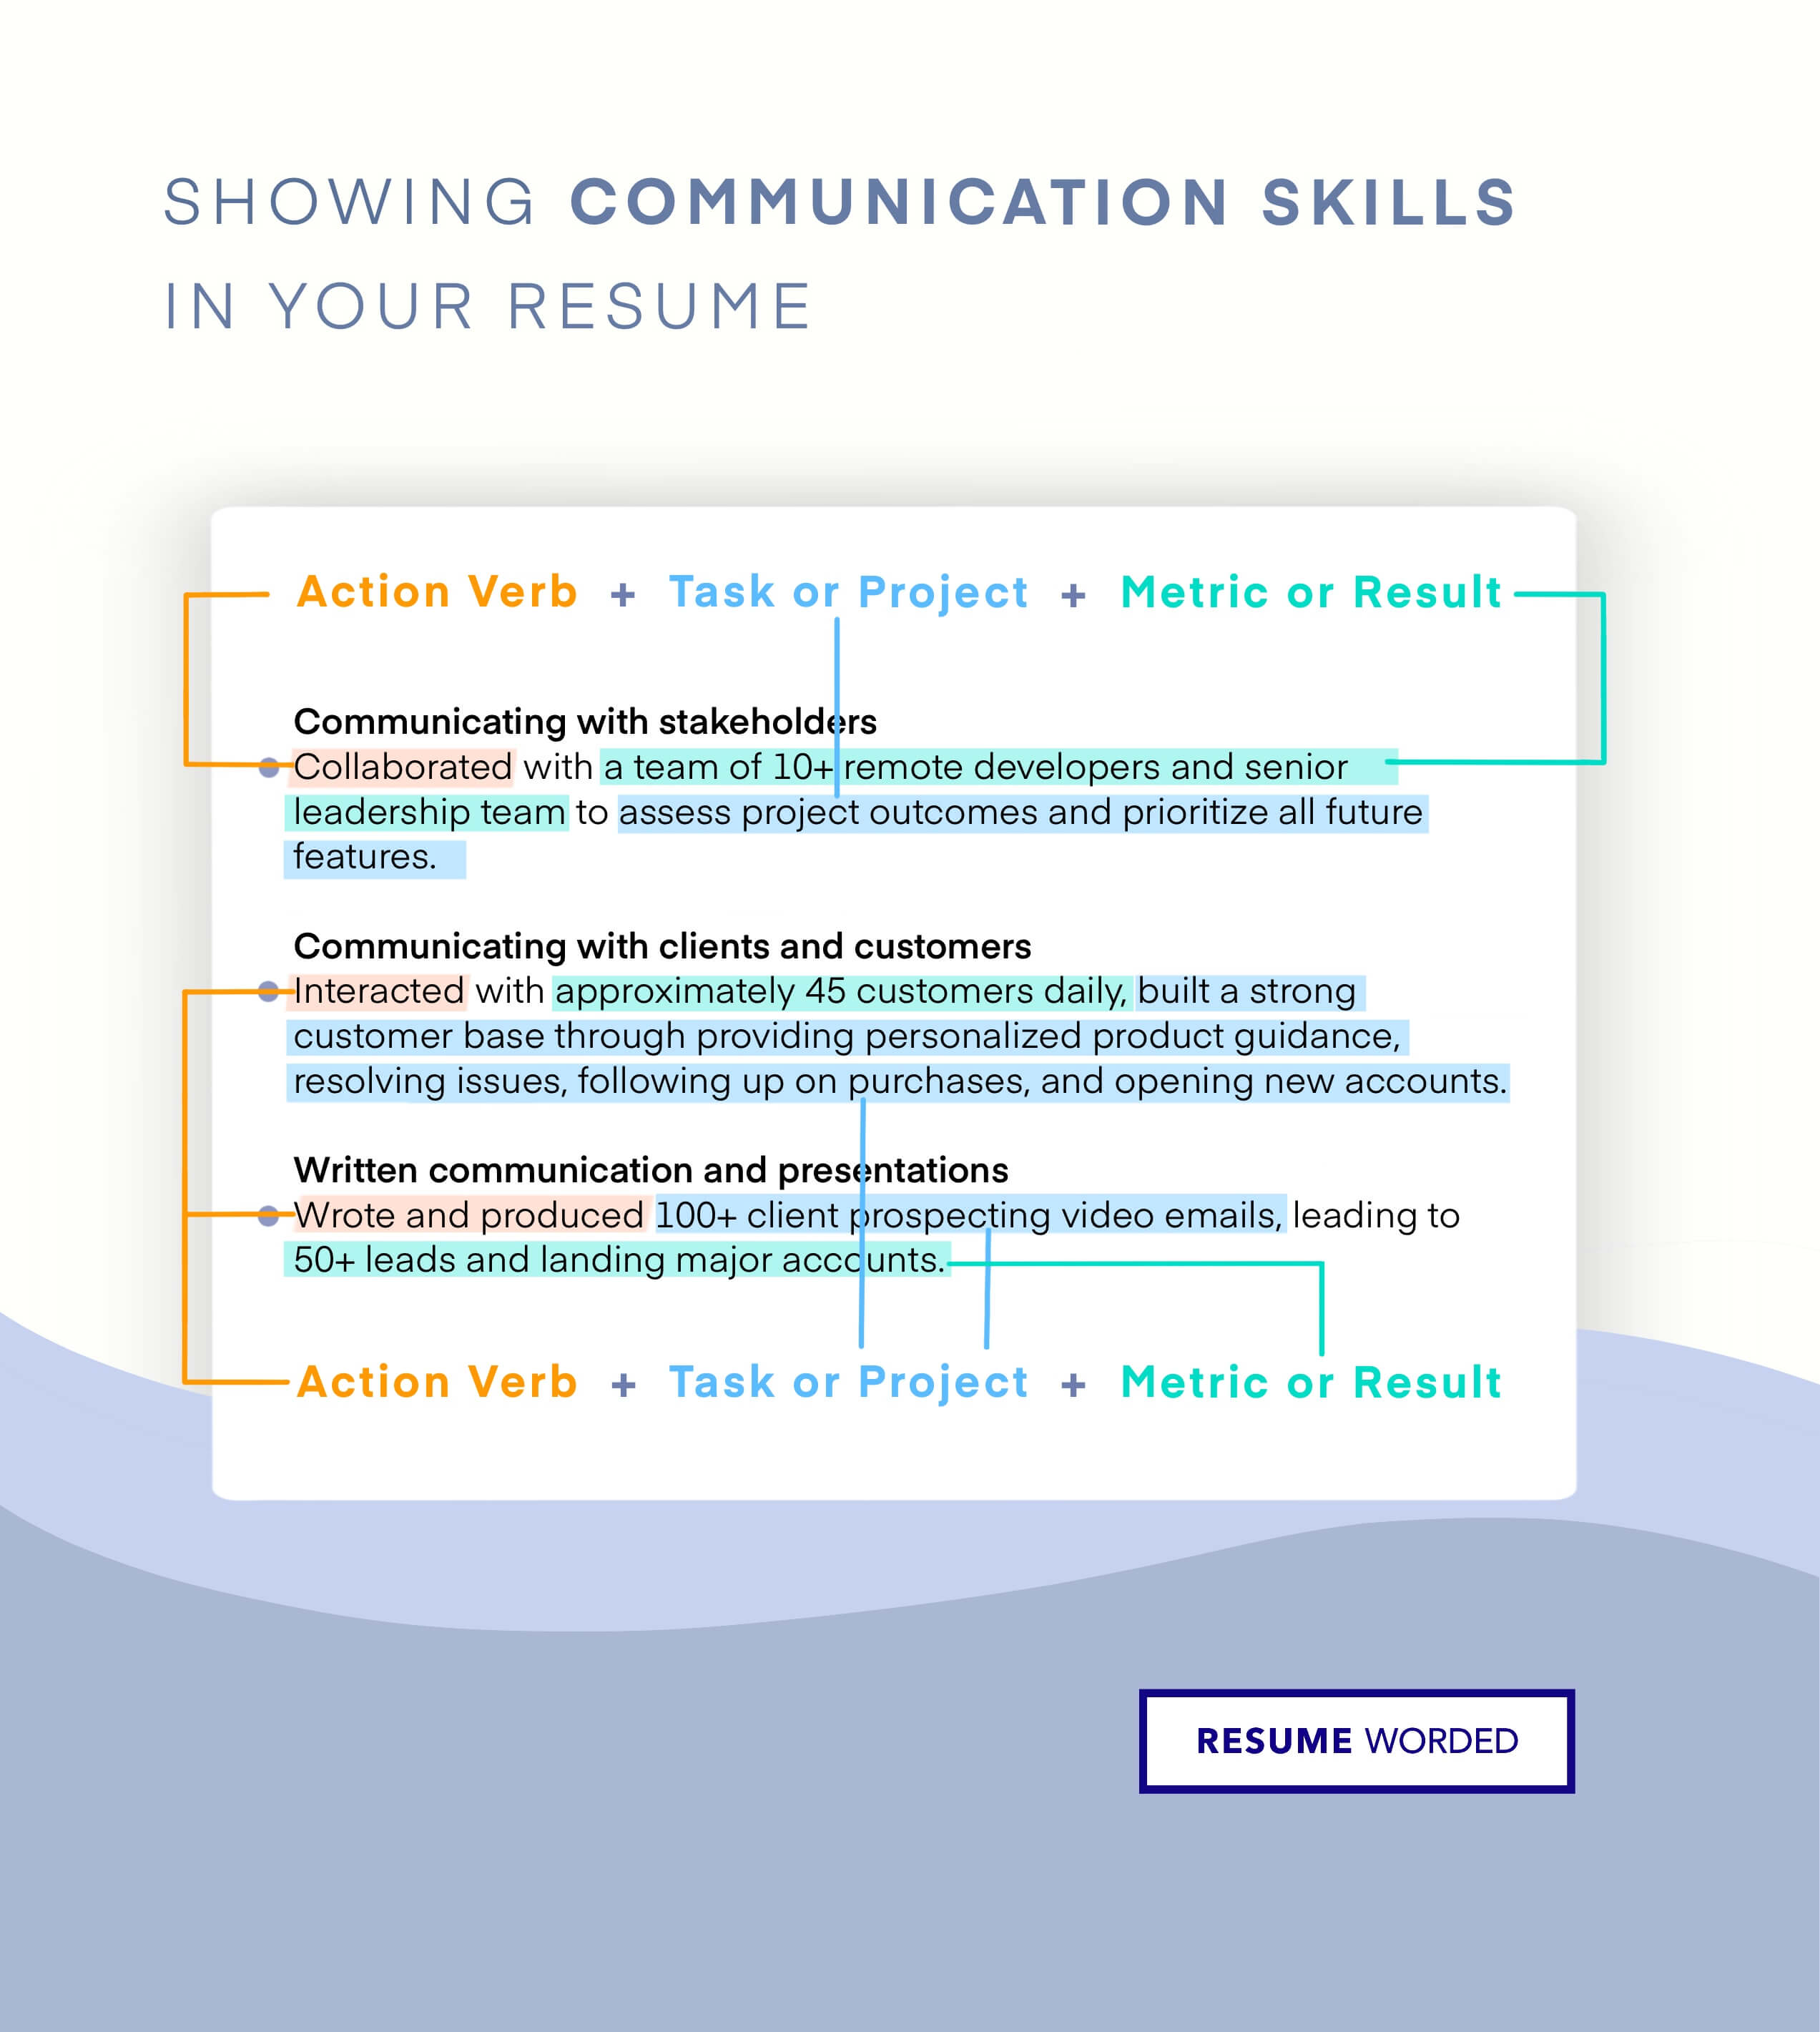 Demonstrate leadership and communication skills - IT Network Engineer CV